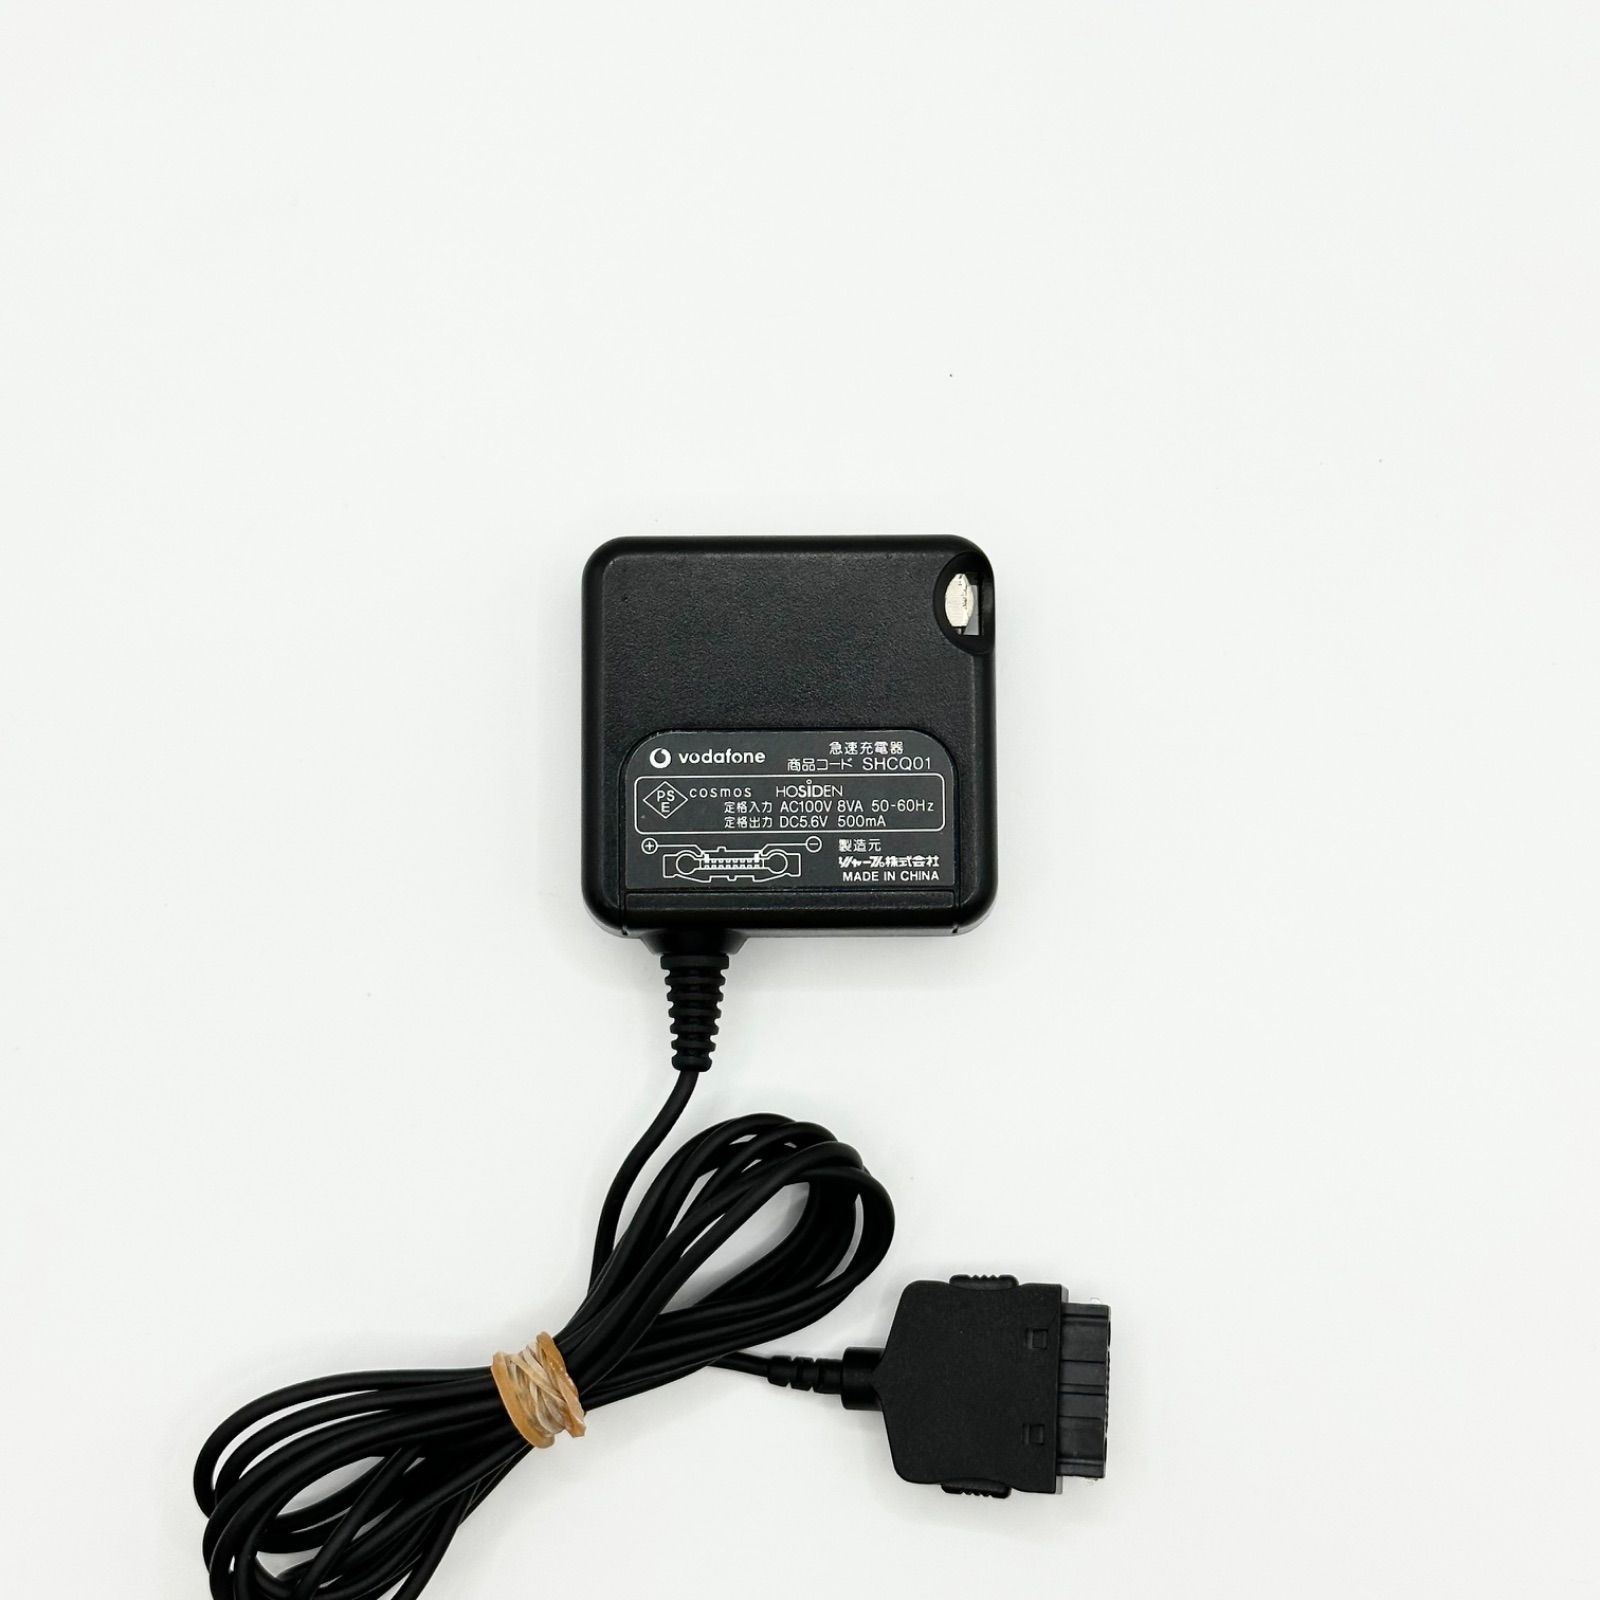 SHARP SHCQ01 シャープ vodafone ガラケー 携帯 ボーダフォン 急速充電器 充電器 チャージャー ACアダプター きりん  メルカリ